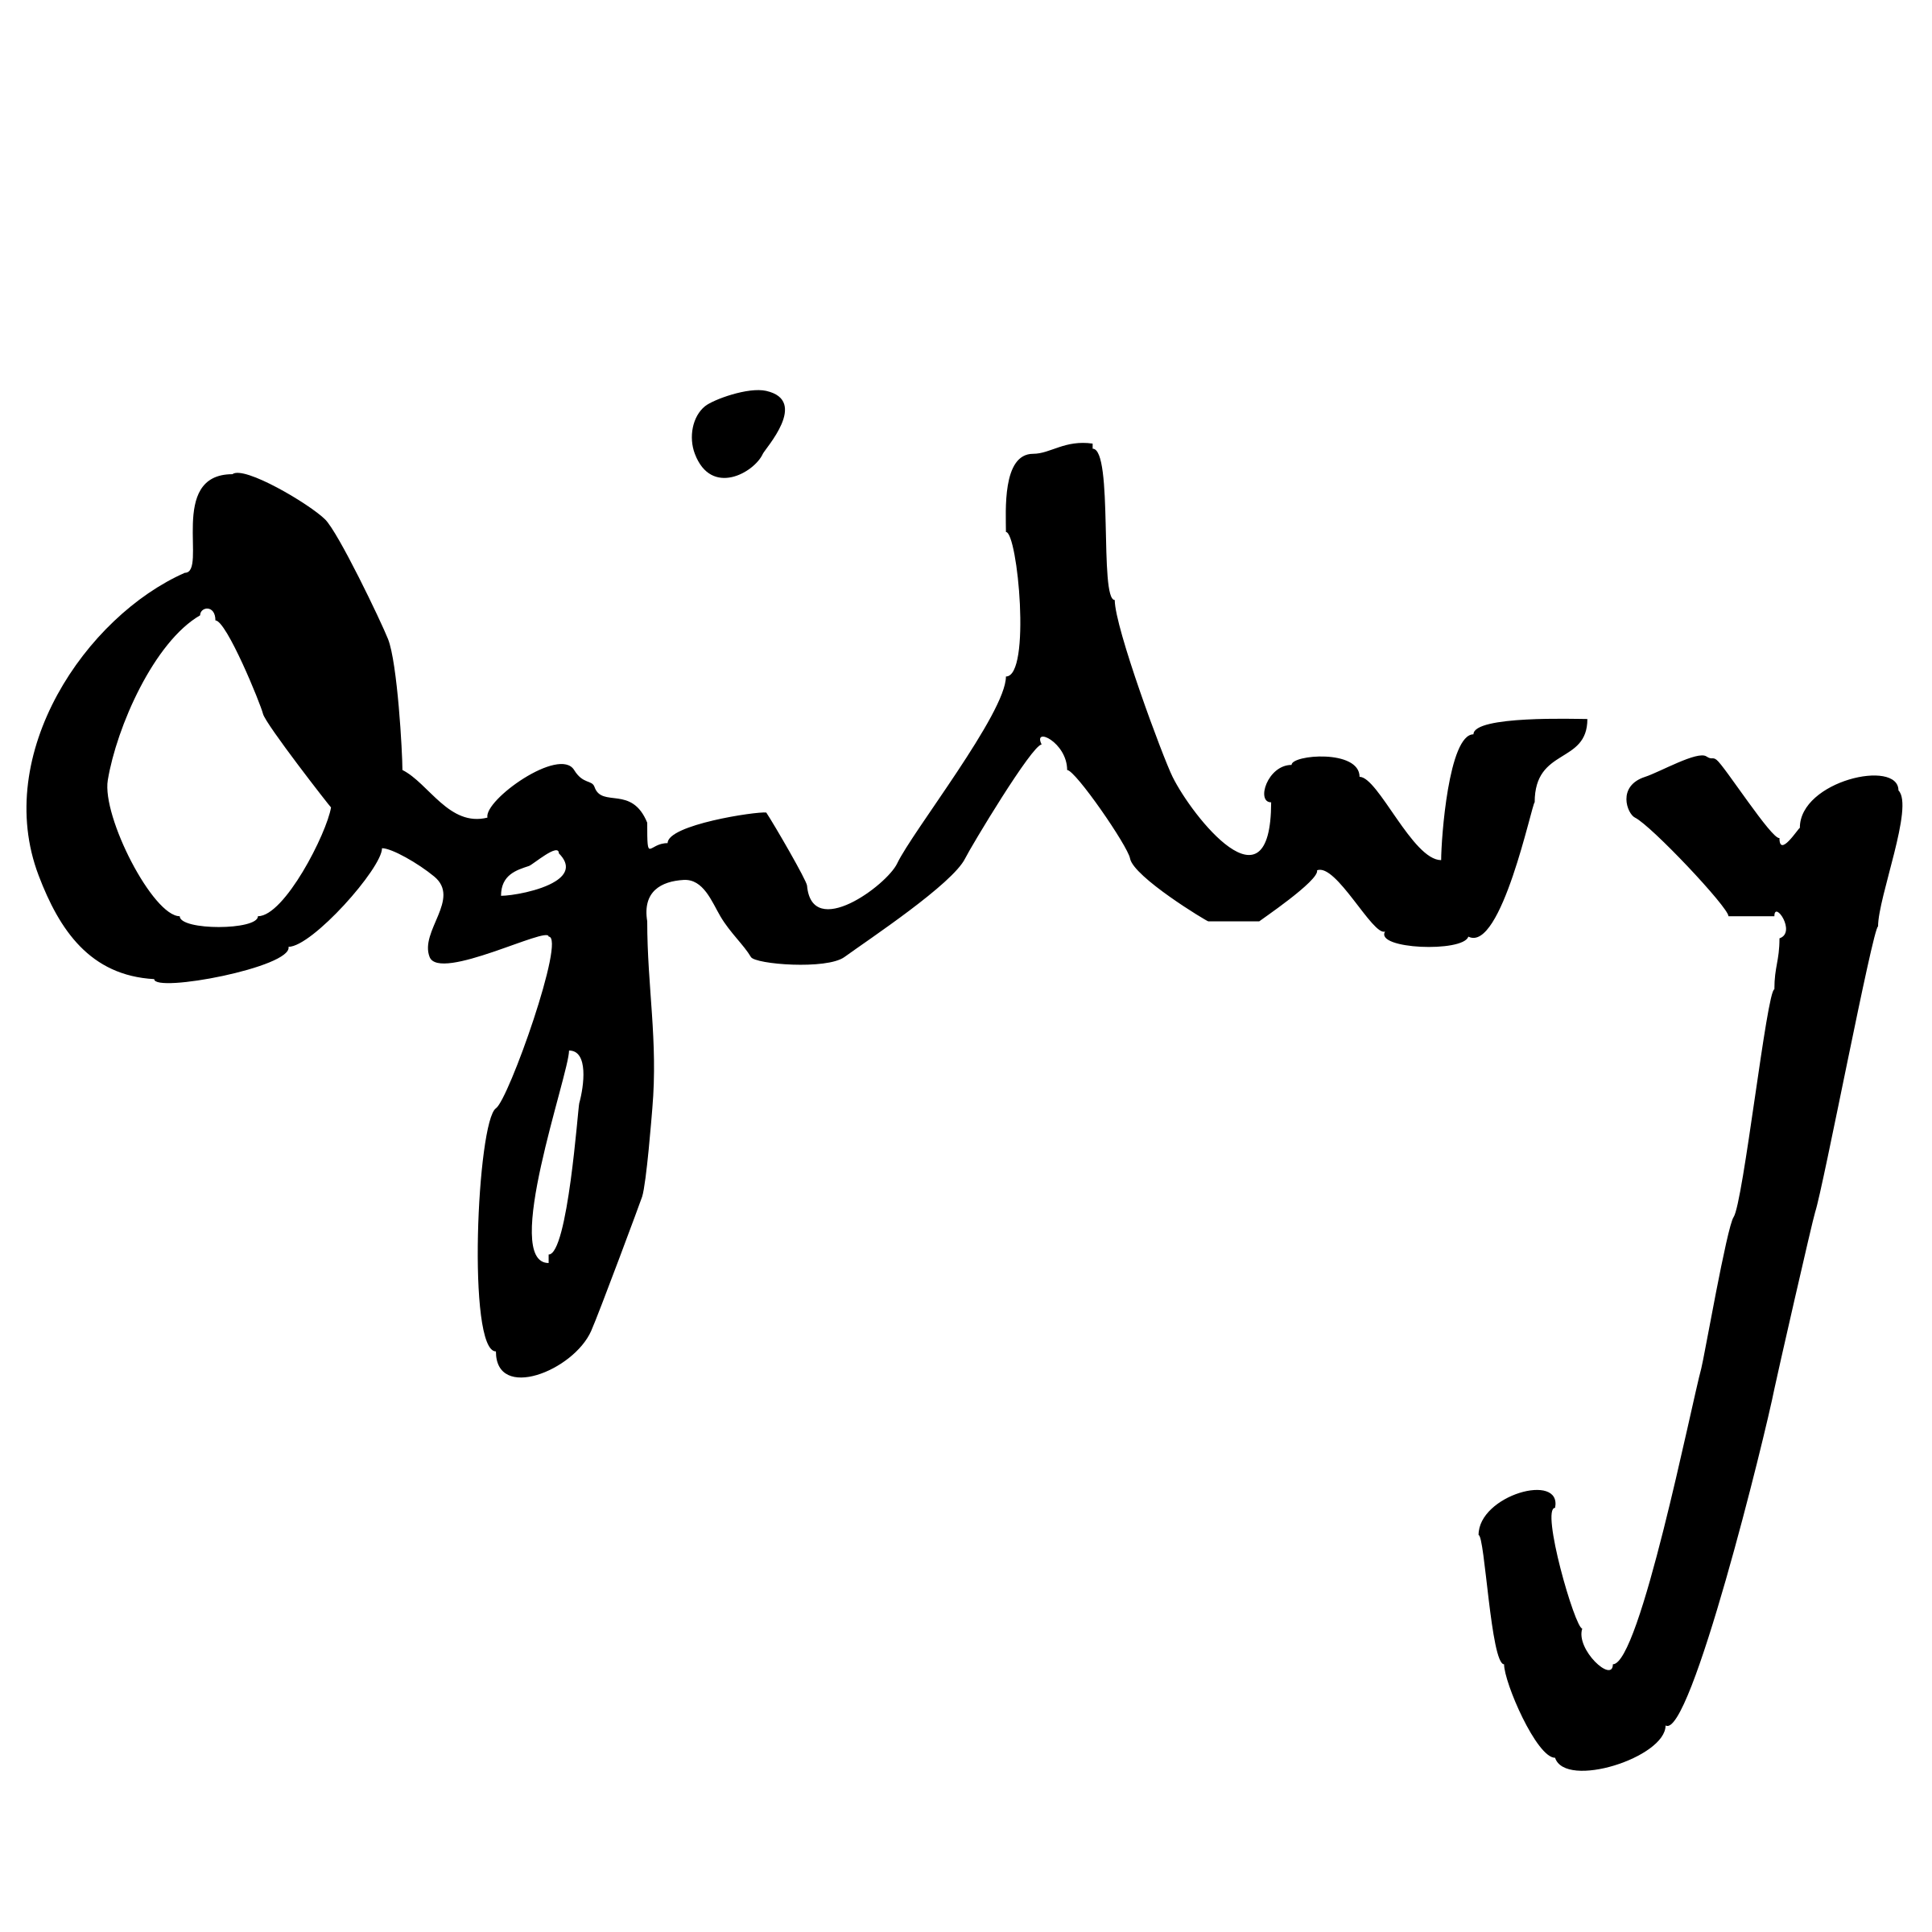 ogilvy-logo-black-and-white.png